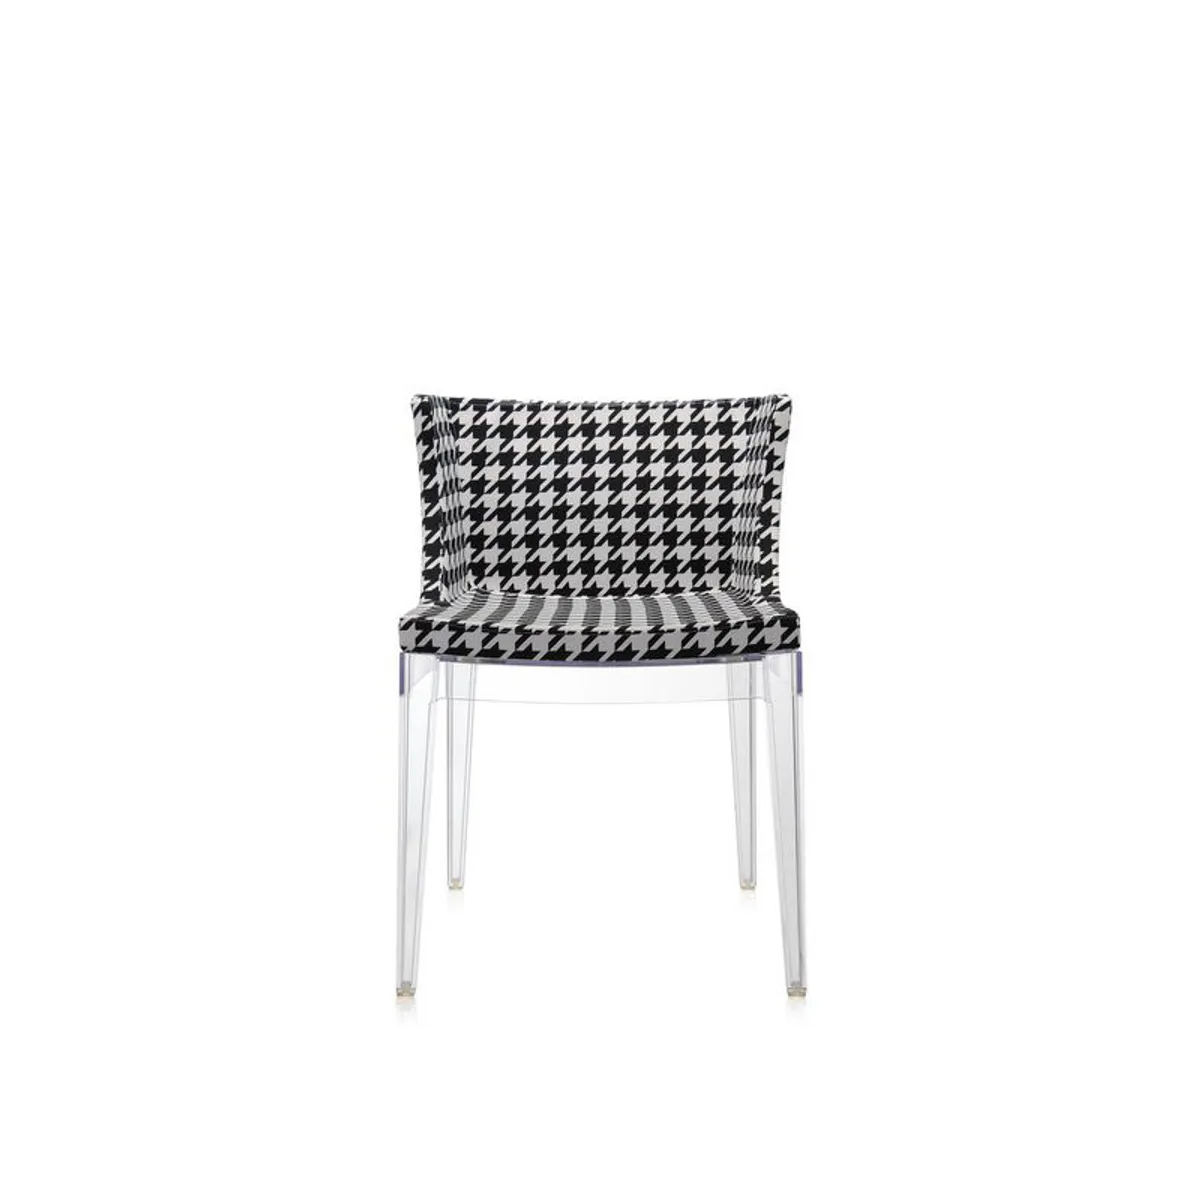 Mademoiselle Chair Hounds 025